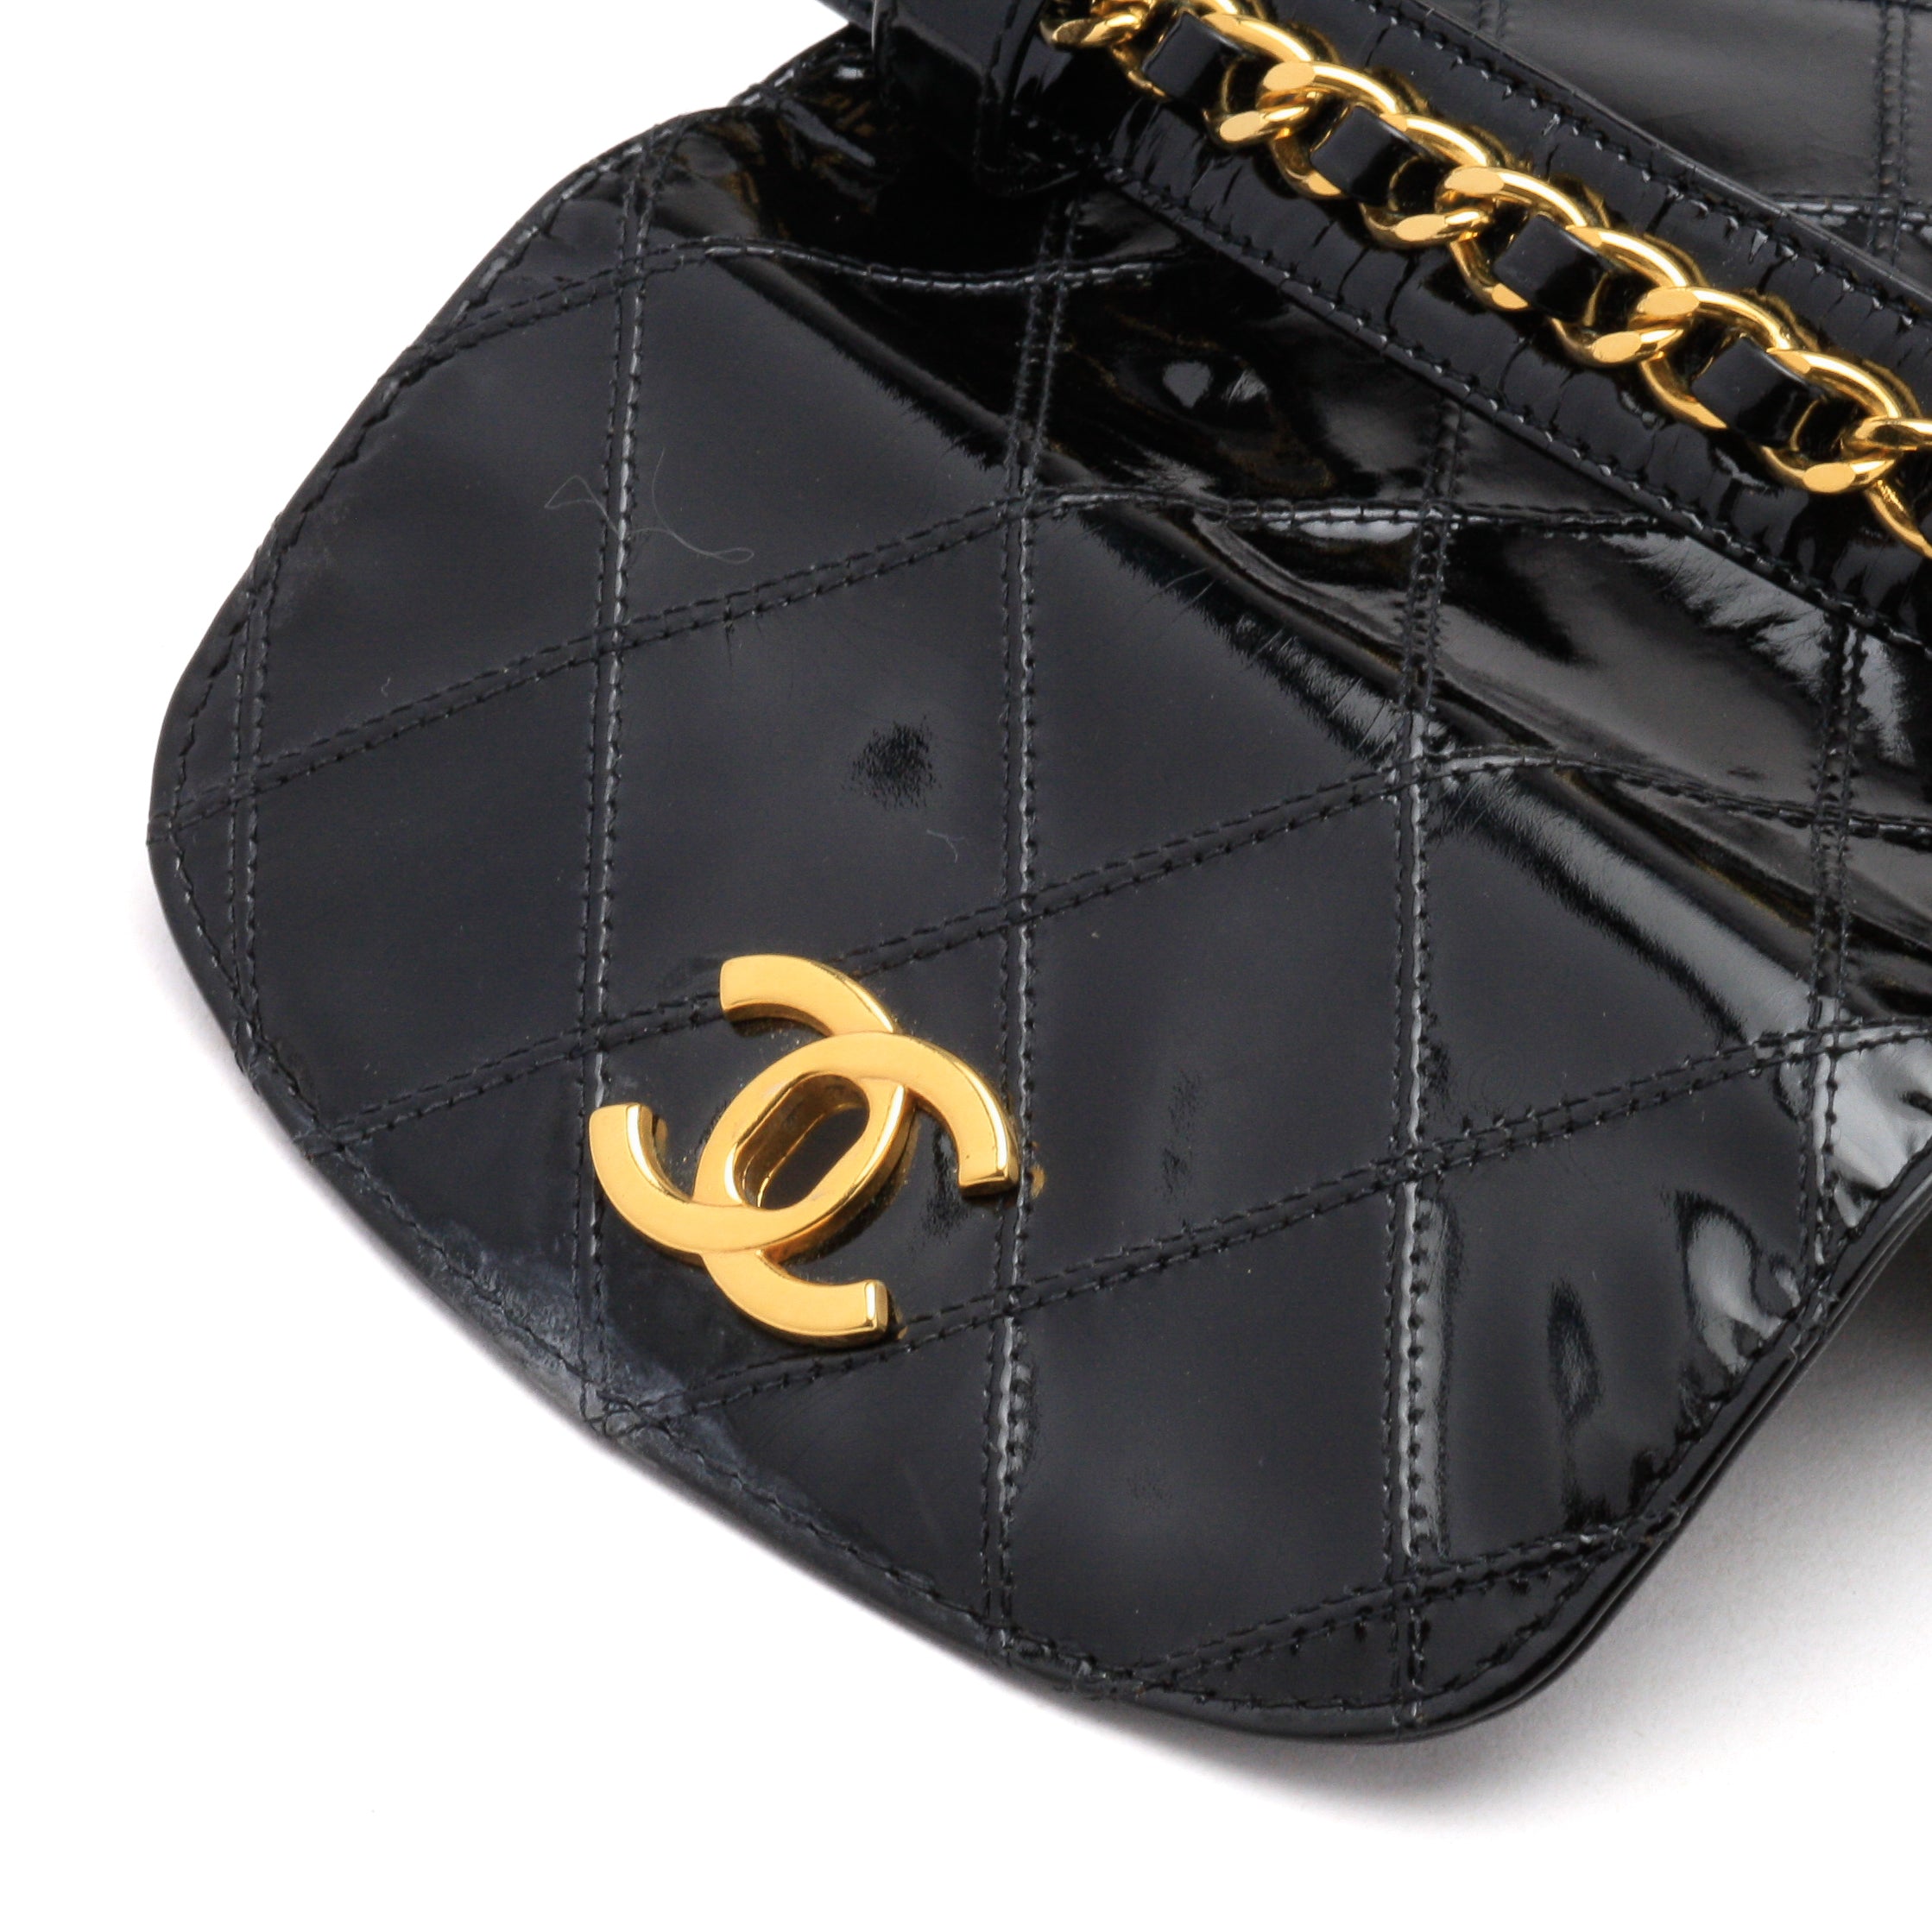 chanel purse black friday